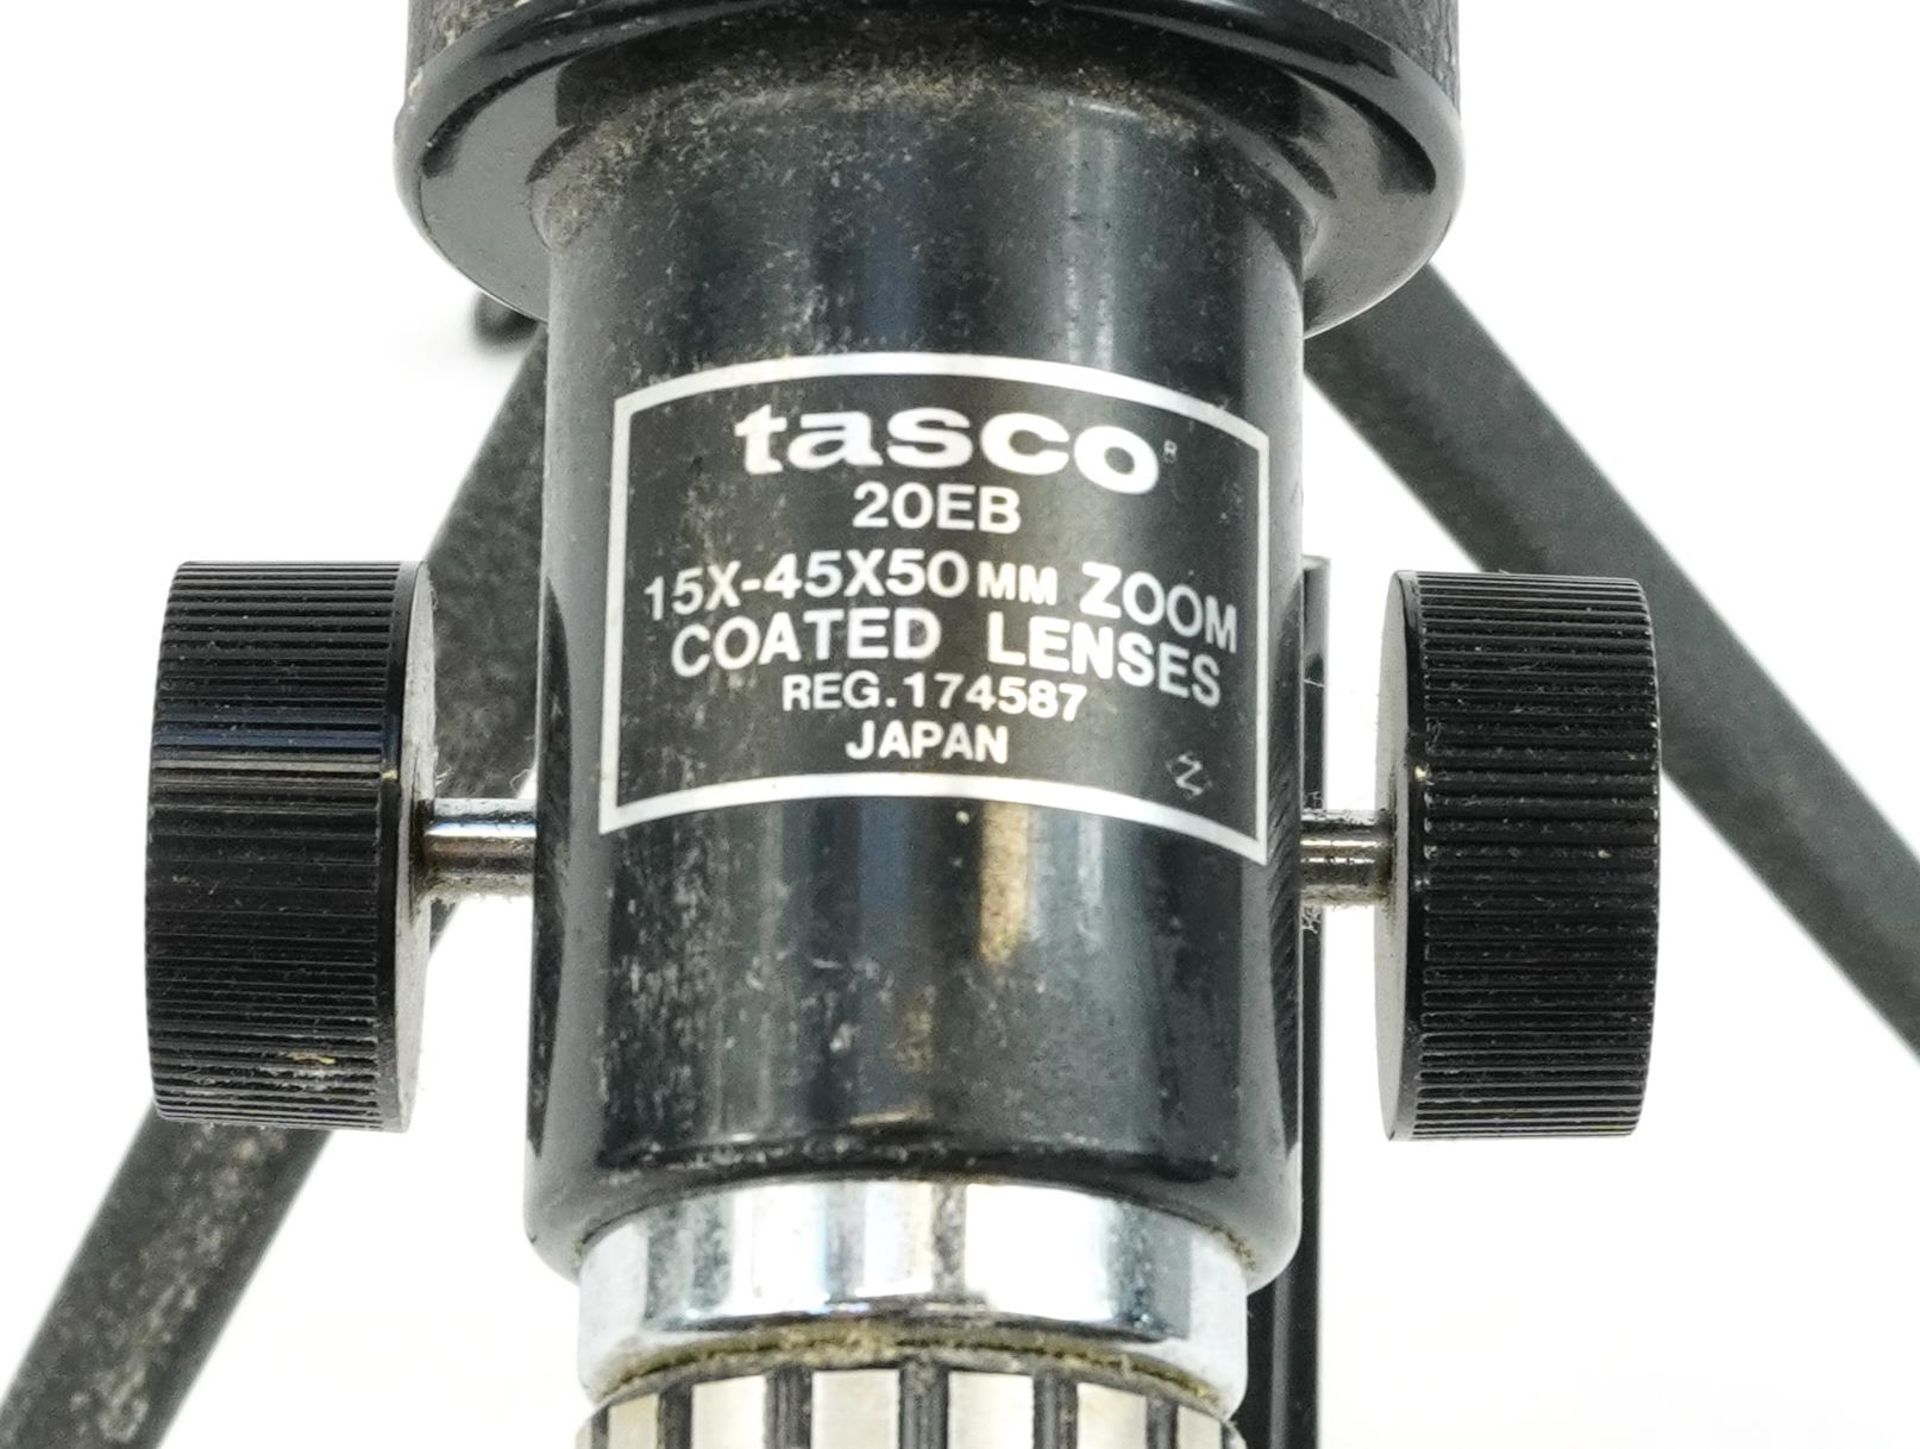 Tasco 20EB 15X-45 X 50mm spotting scope - Image 3 of 3